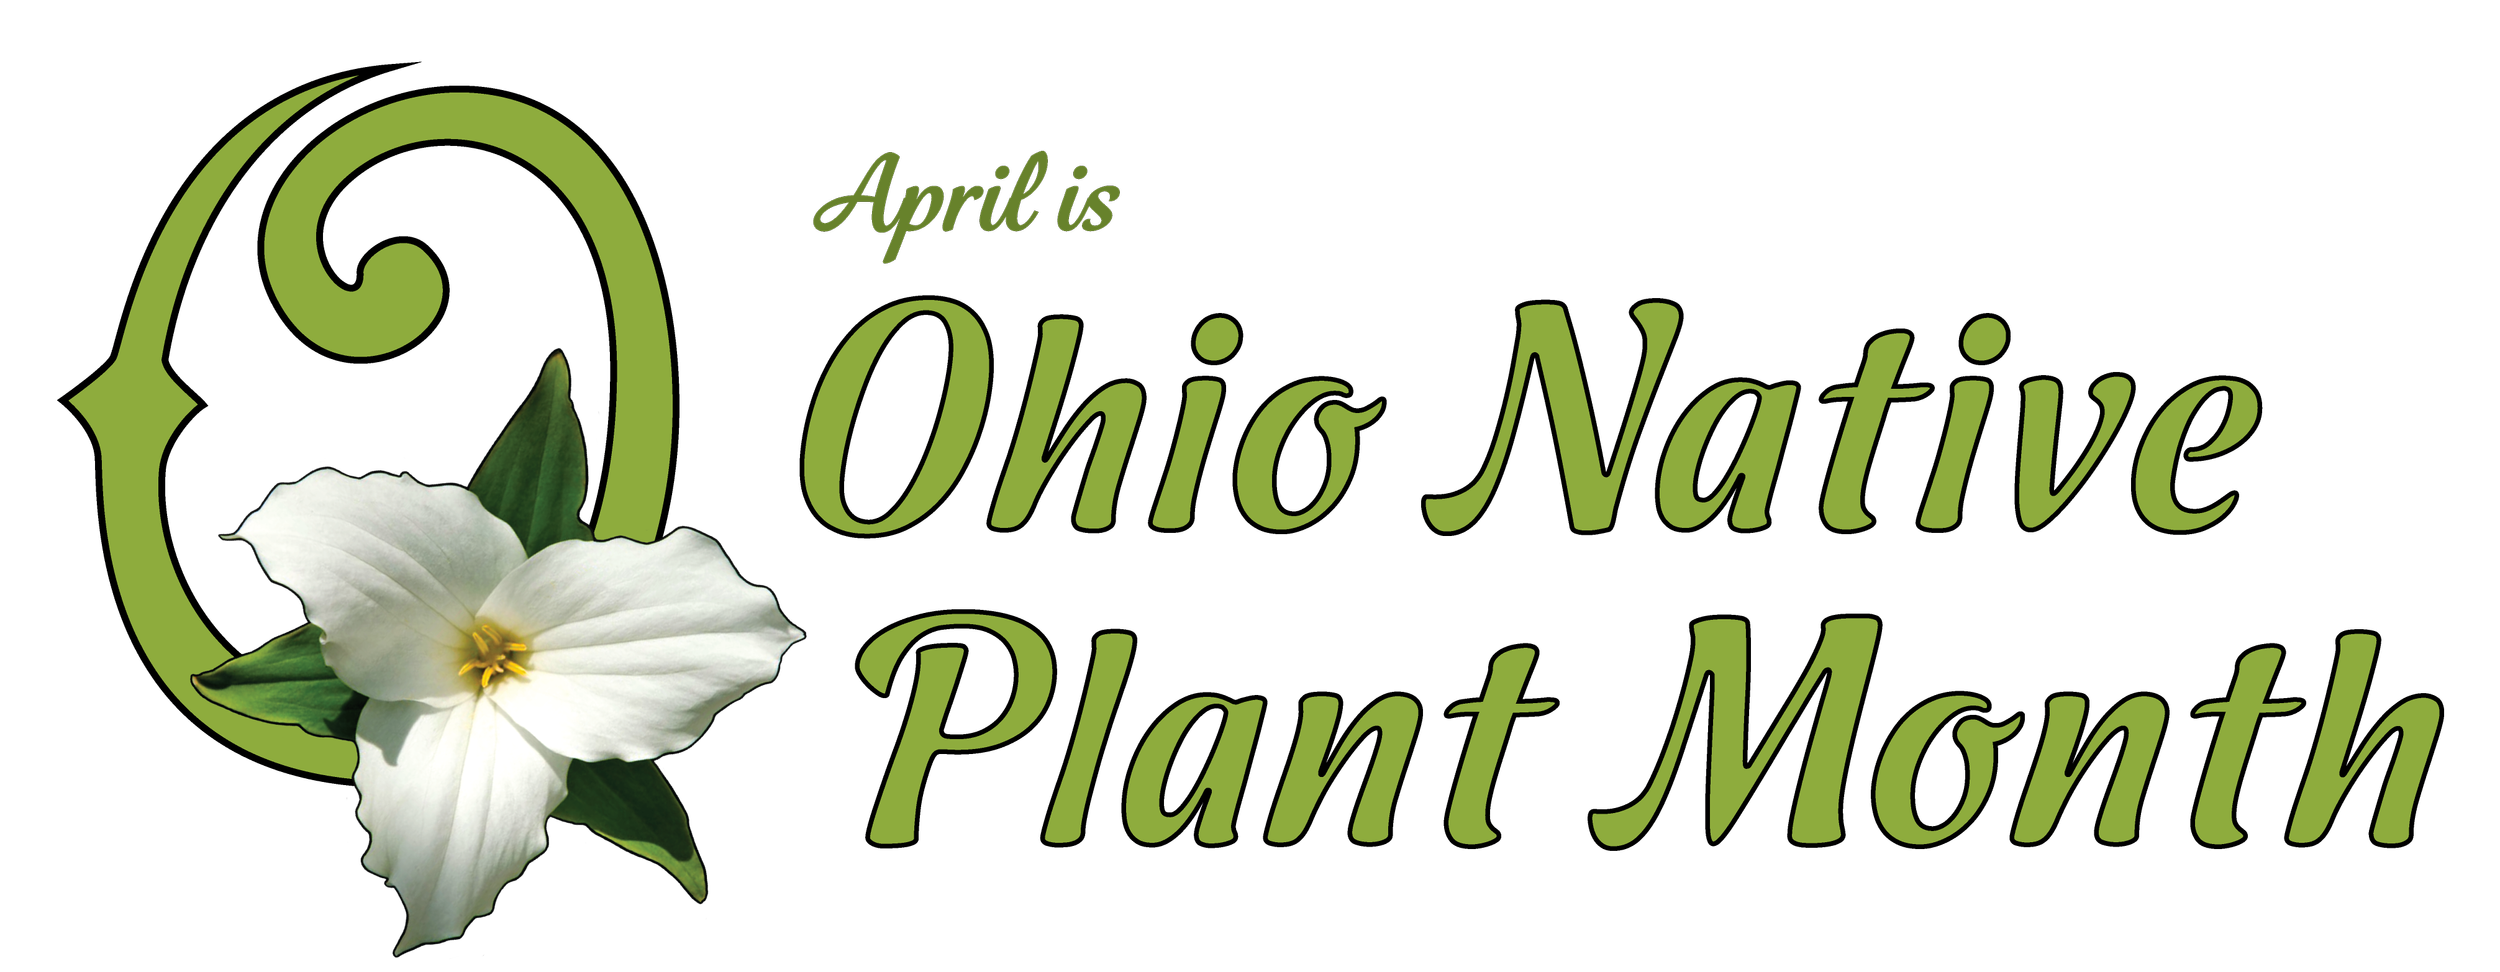 Ohio Native Plant Month